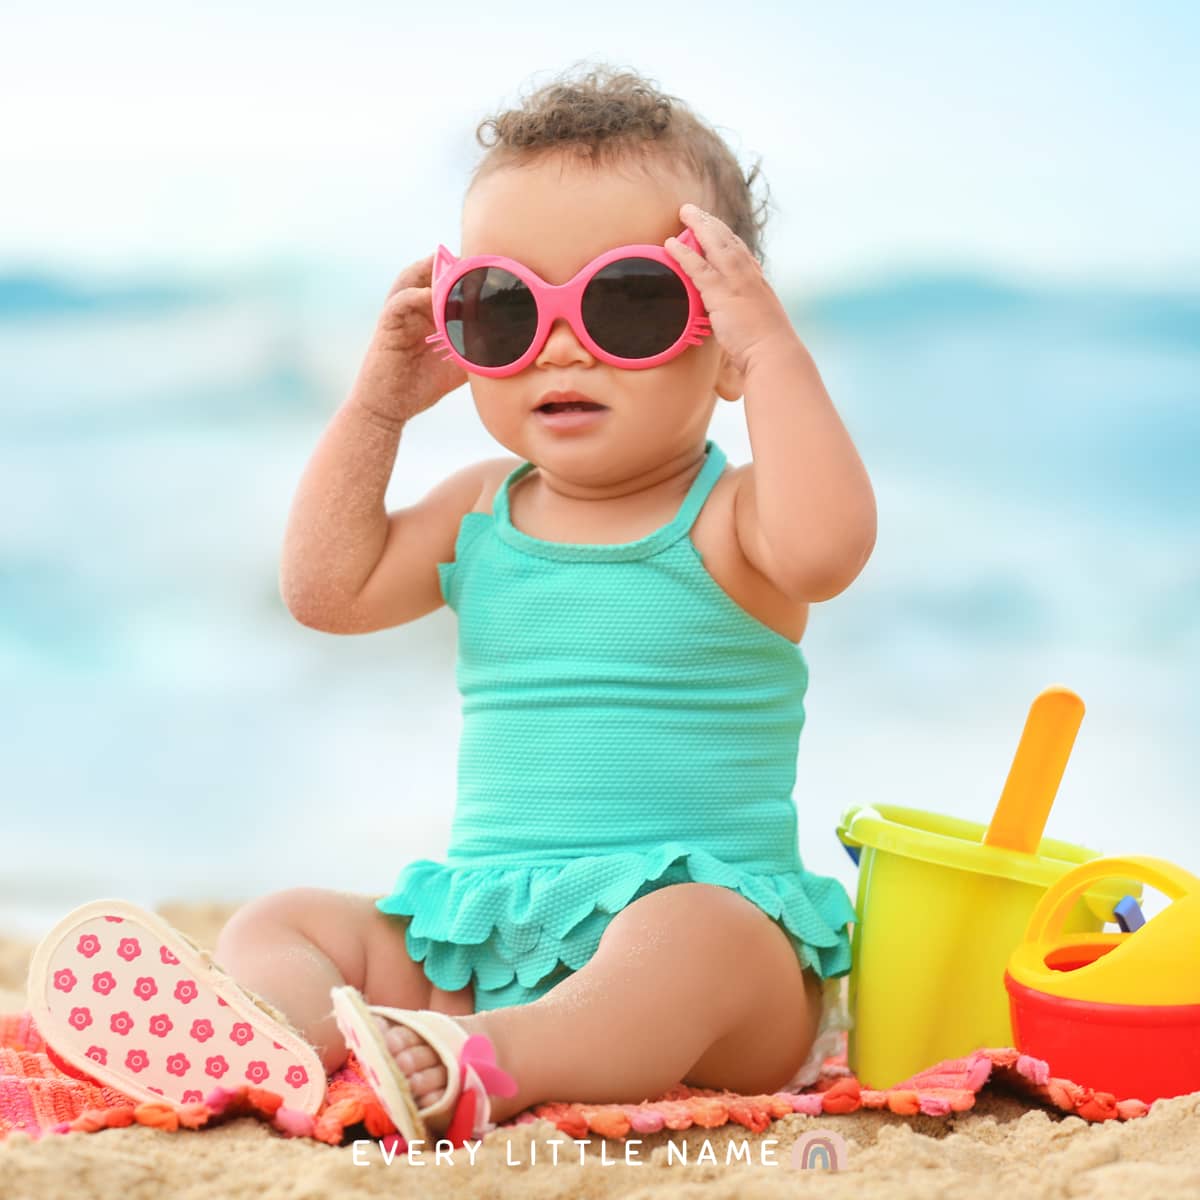 Baby girl wearing sunglasses at the beach.